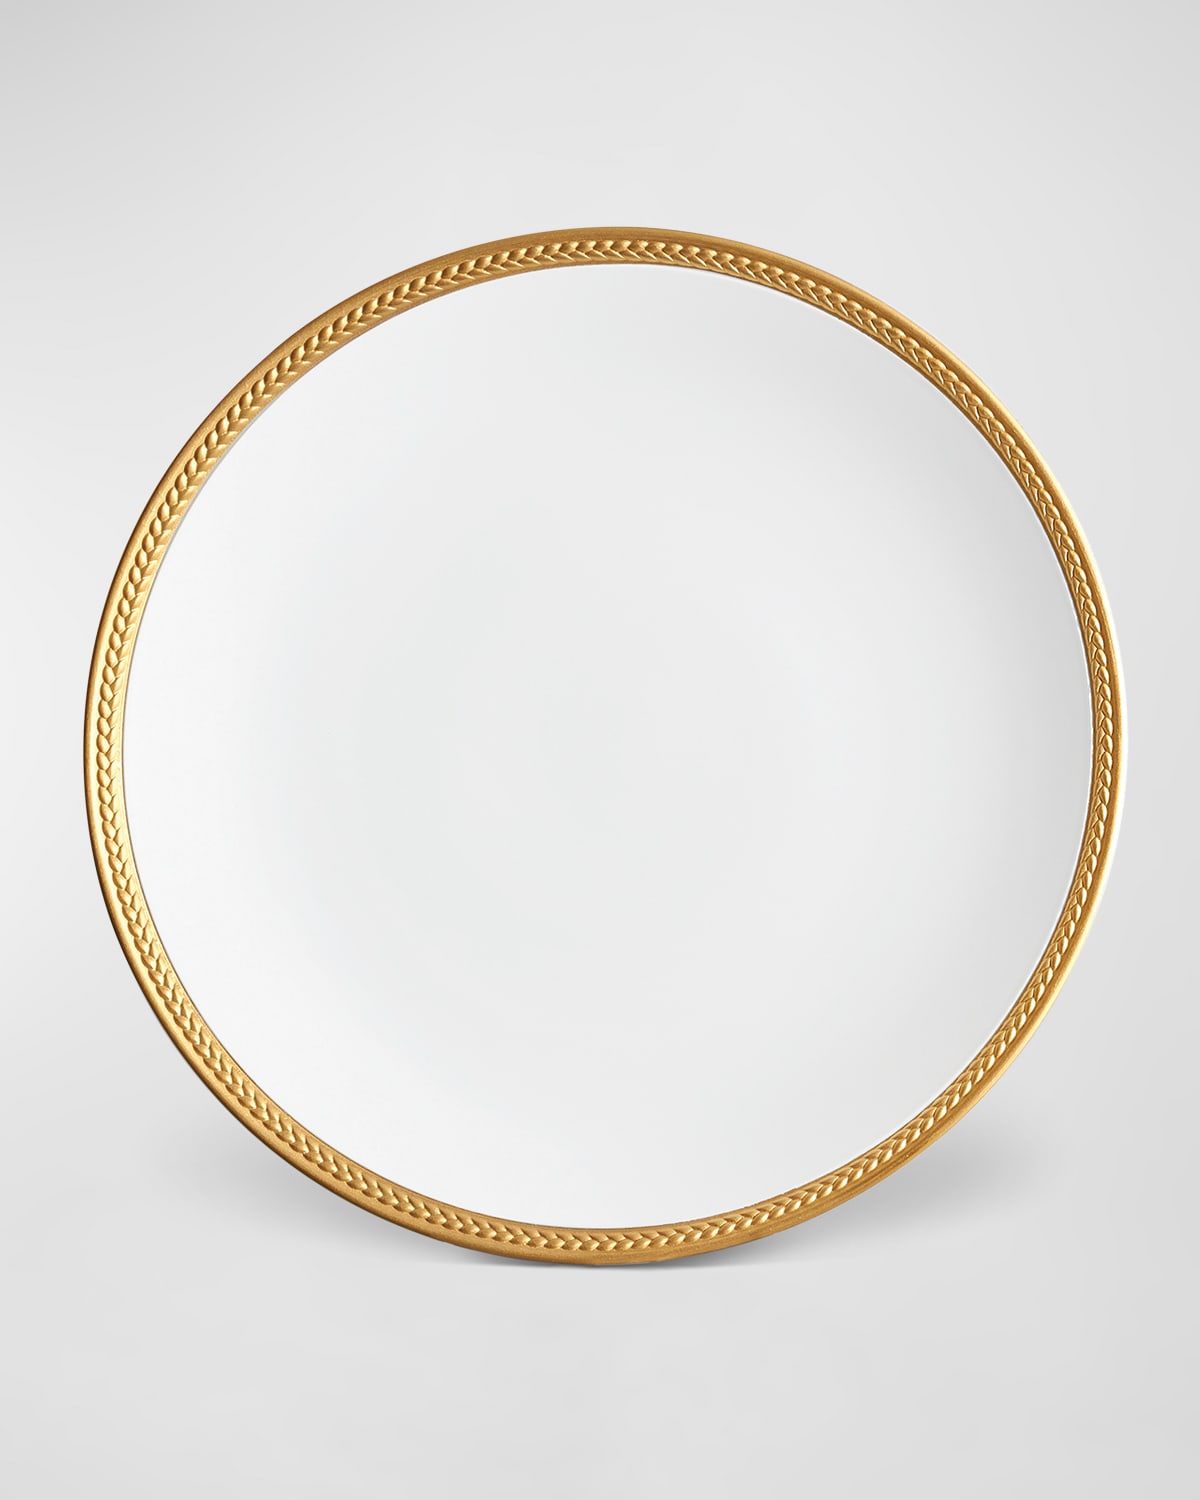 L'objet Soie Tressee 24k Gold-plated Dinner Plate